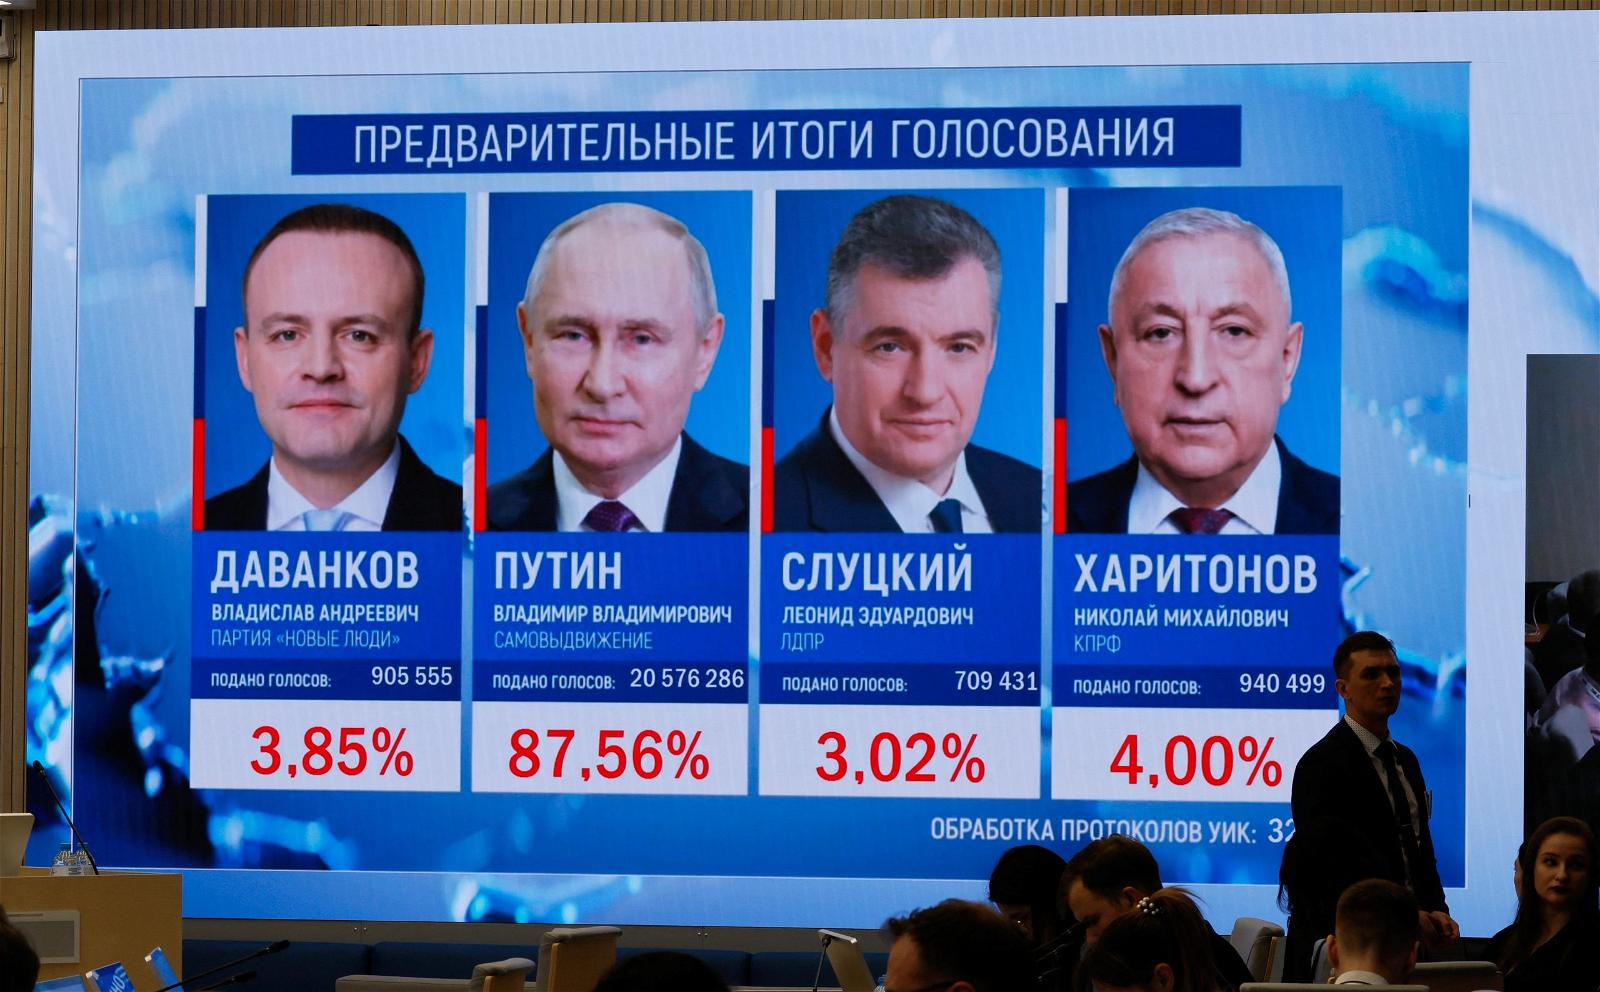 Vladimir Putin, Russia, Elections, Ukraine